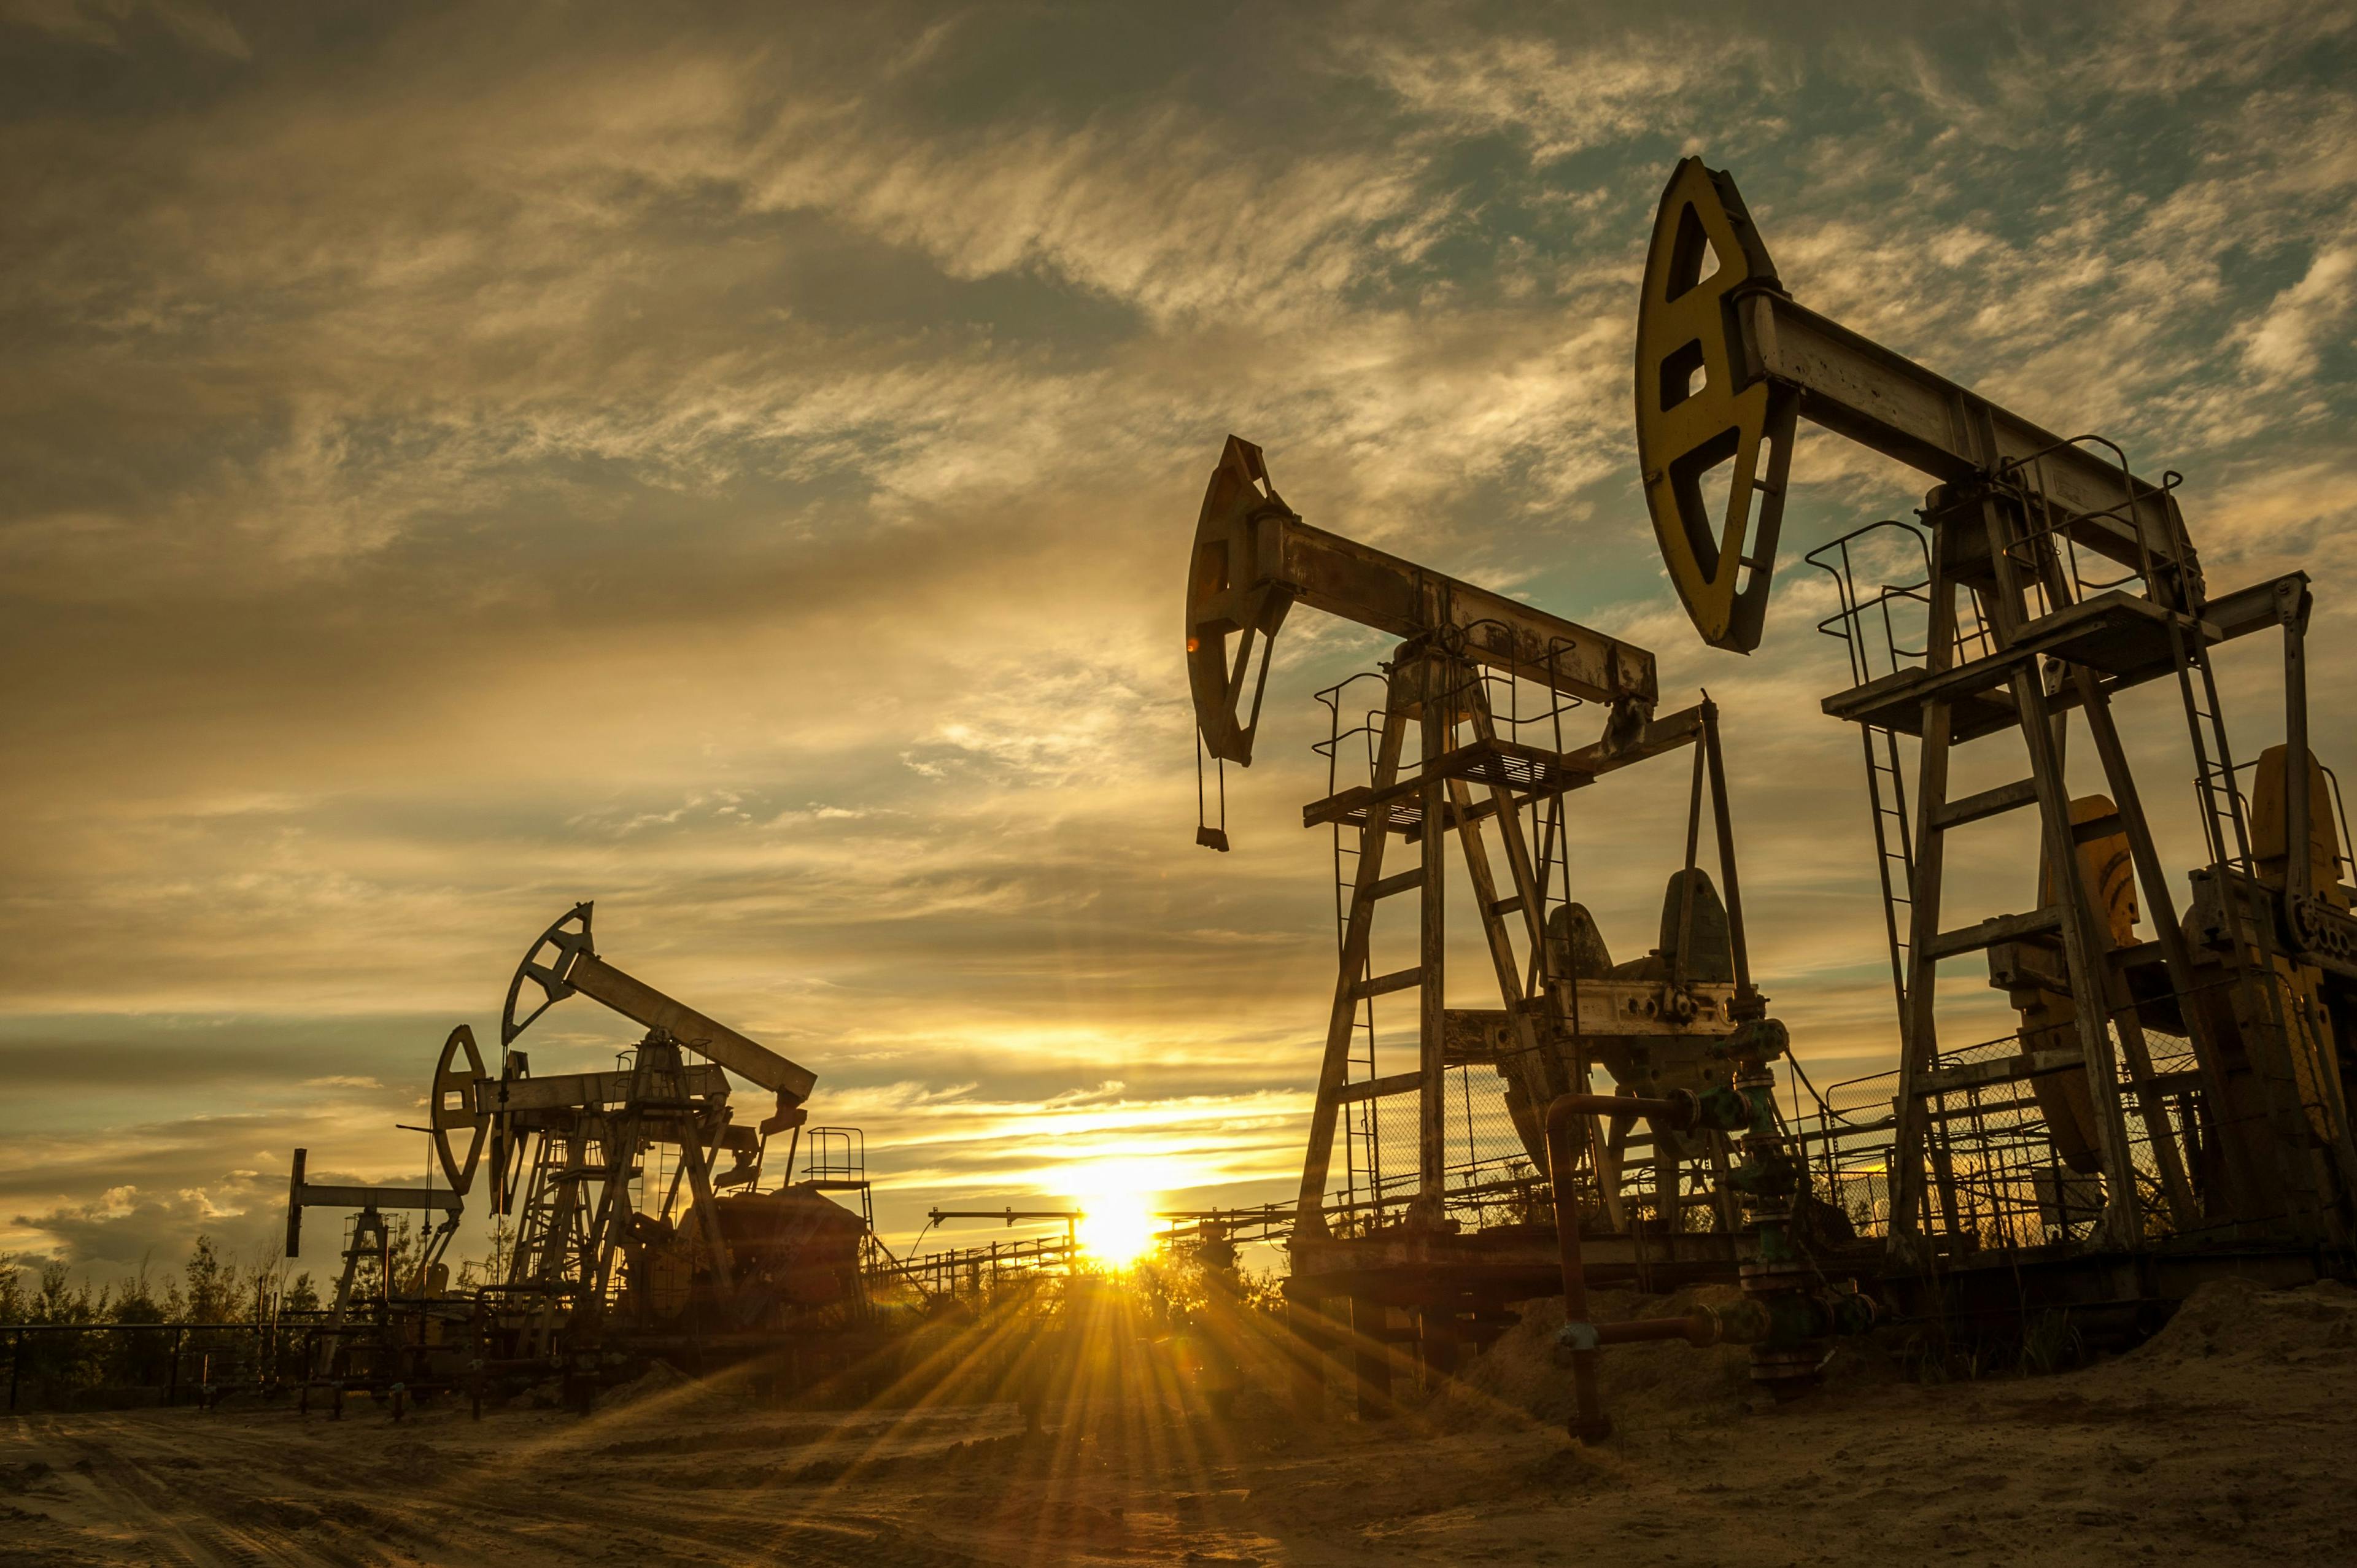 Oil pumps. | Image Credit: © Ded Pixto - stock.adobe.com